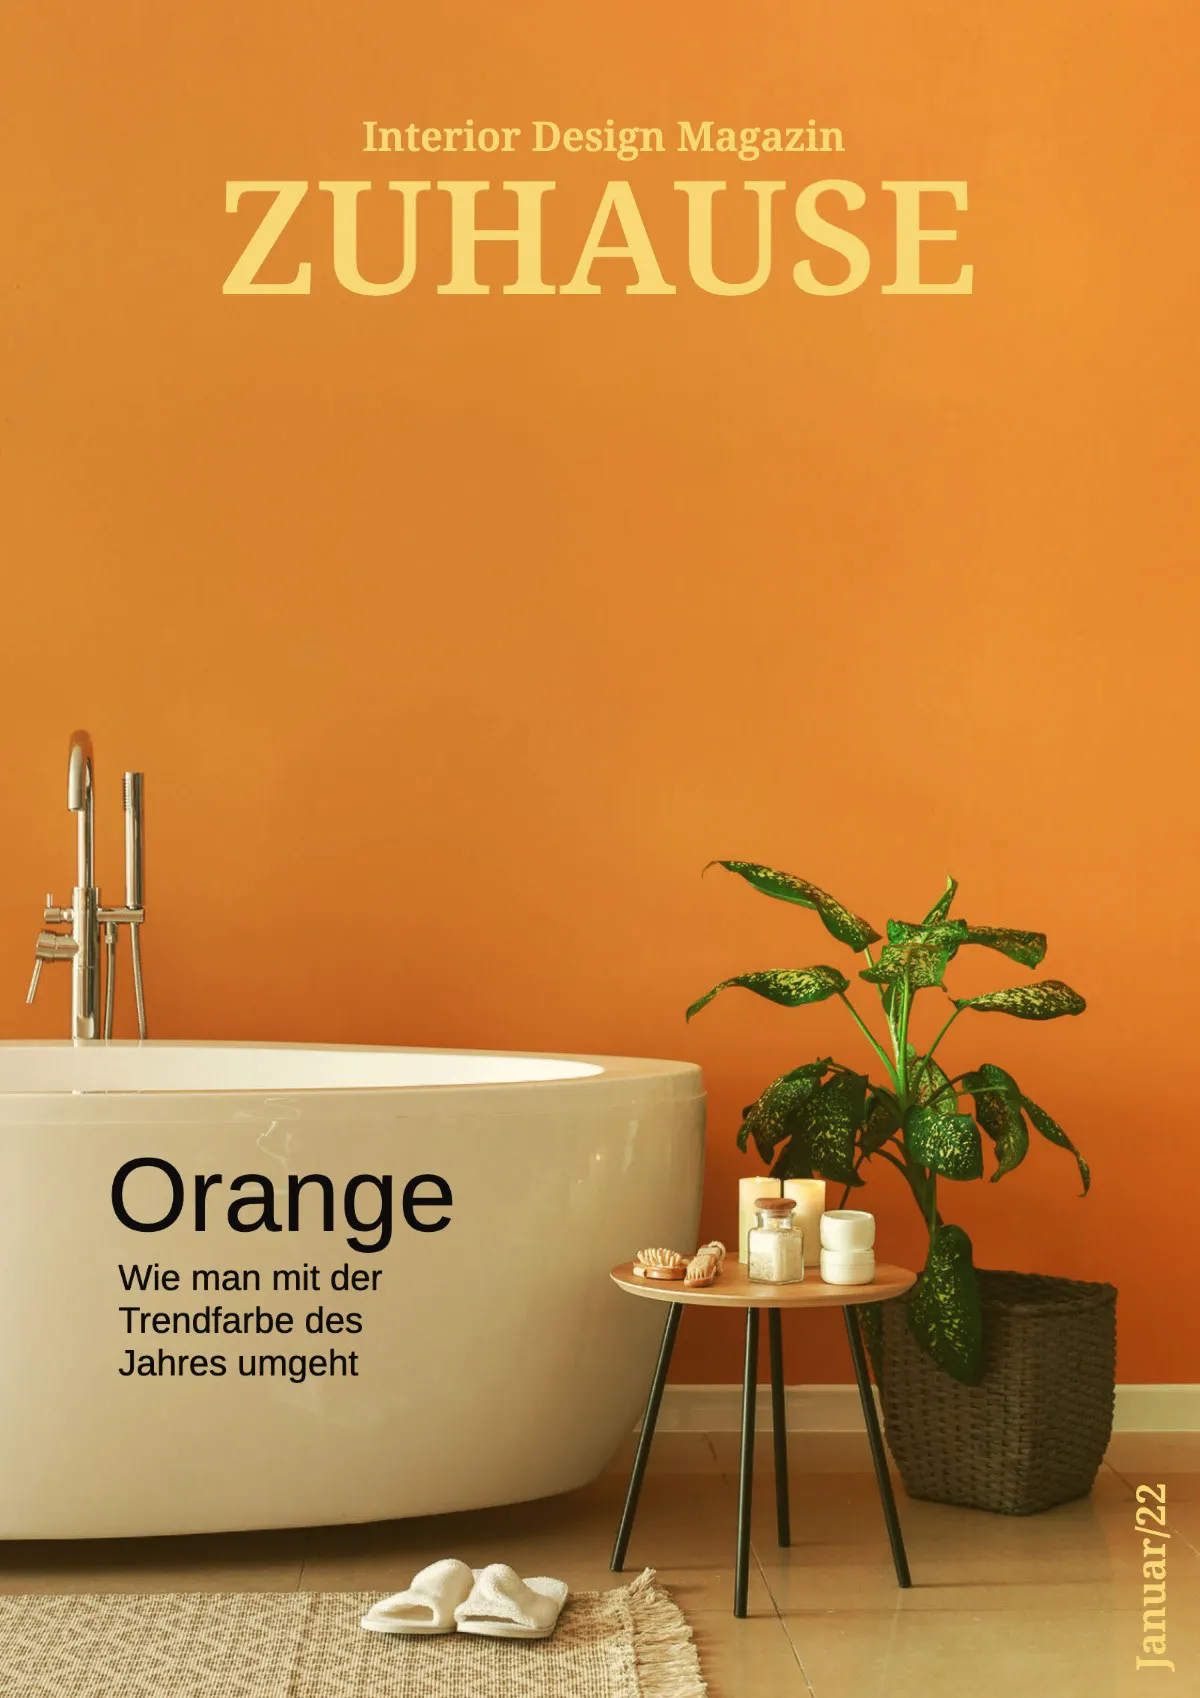 Orange Yellow Interior Design Magazine Cover